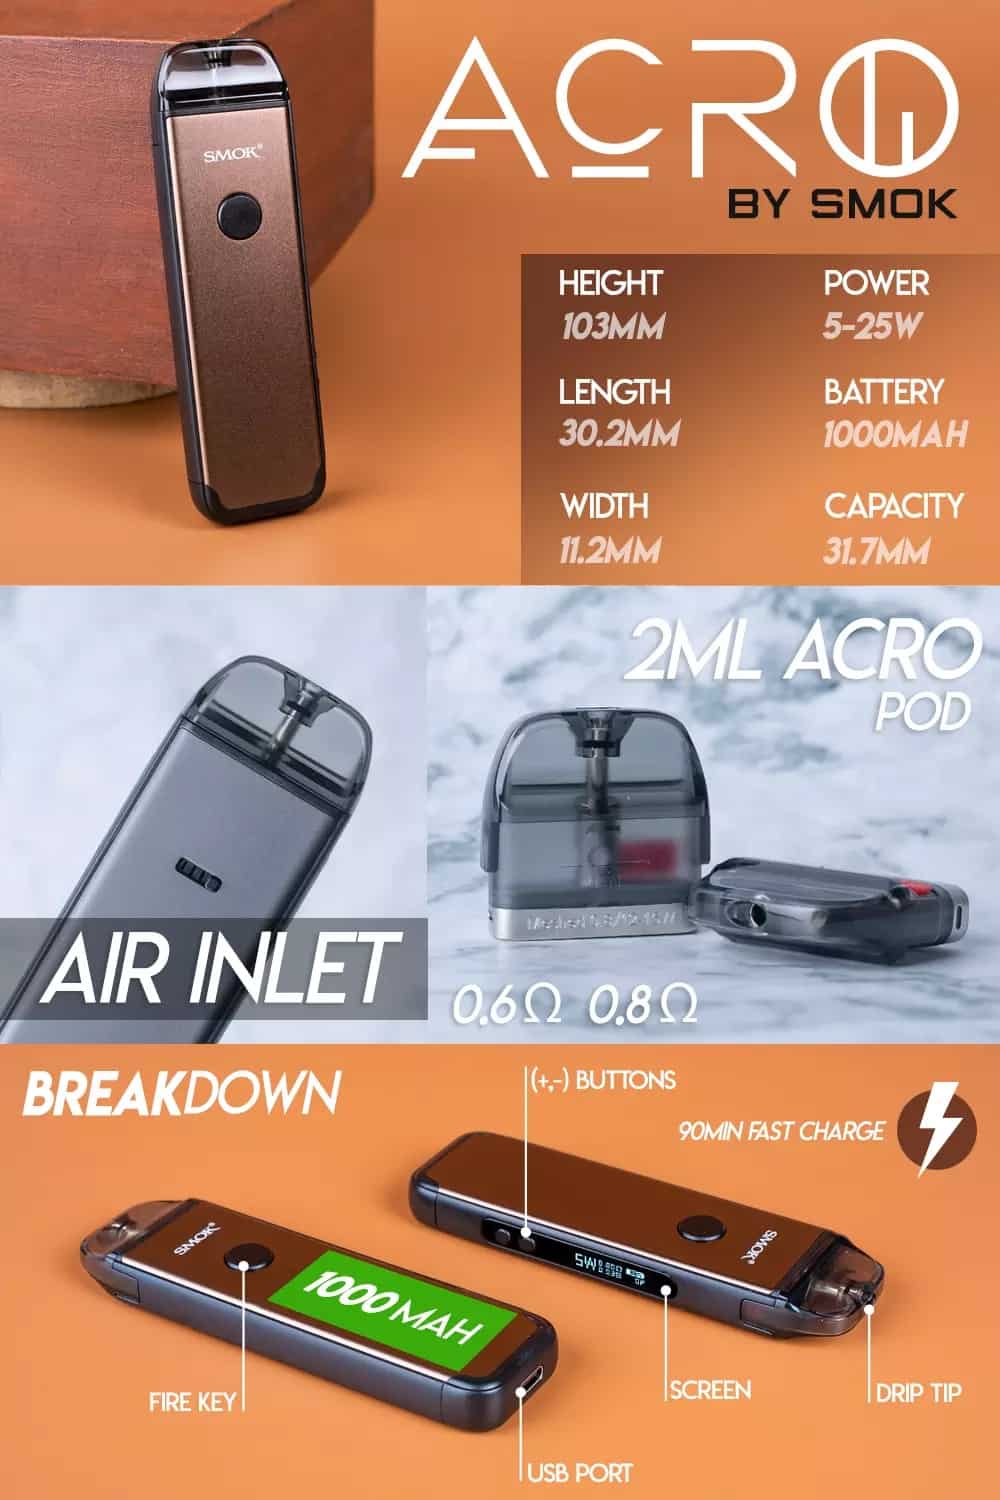 SMOK ACRO 25W Pod Vape Kit